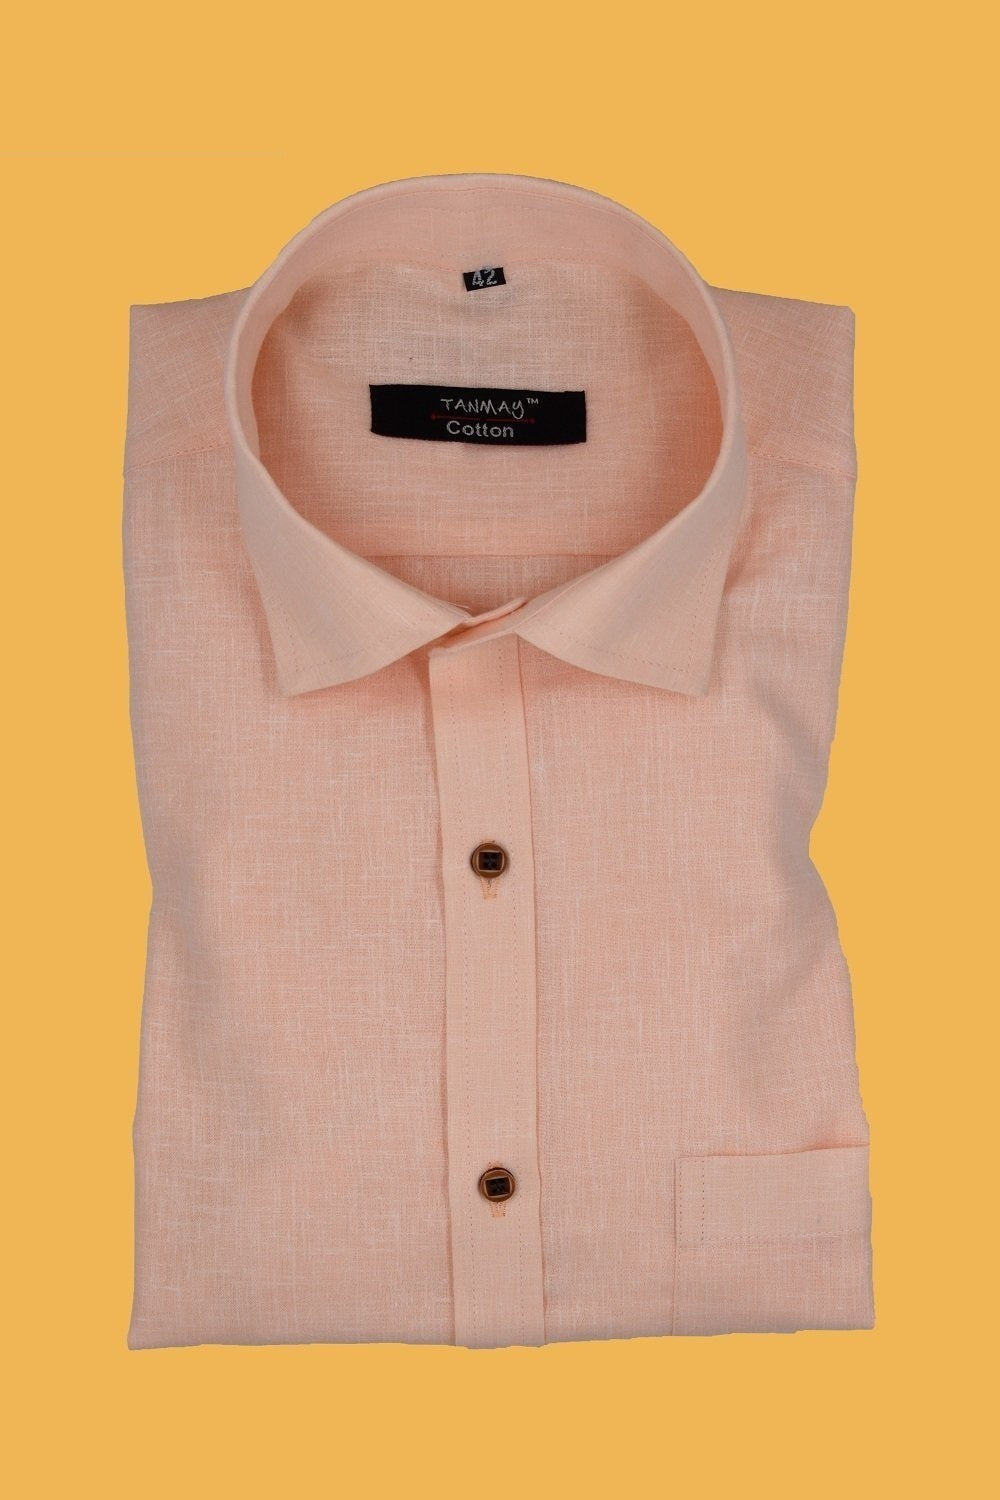 Cotton Tanmay Light Cream Color Linen Fill Formal Cotton Shirt For Men ...